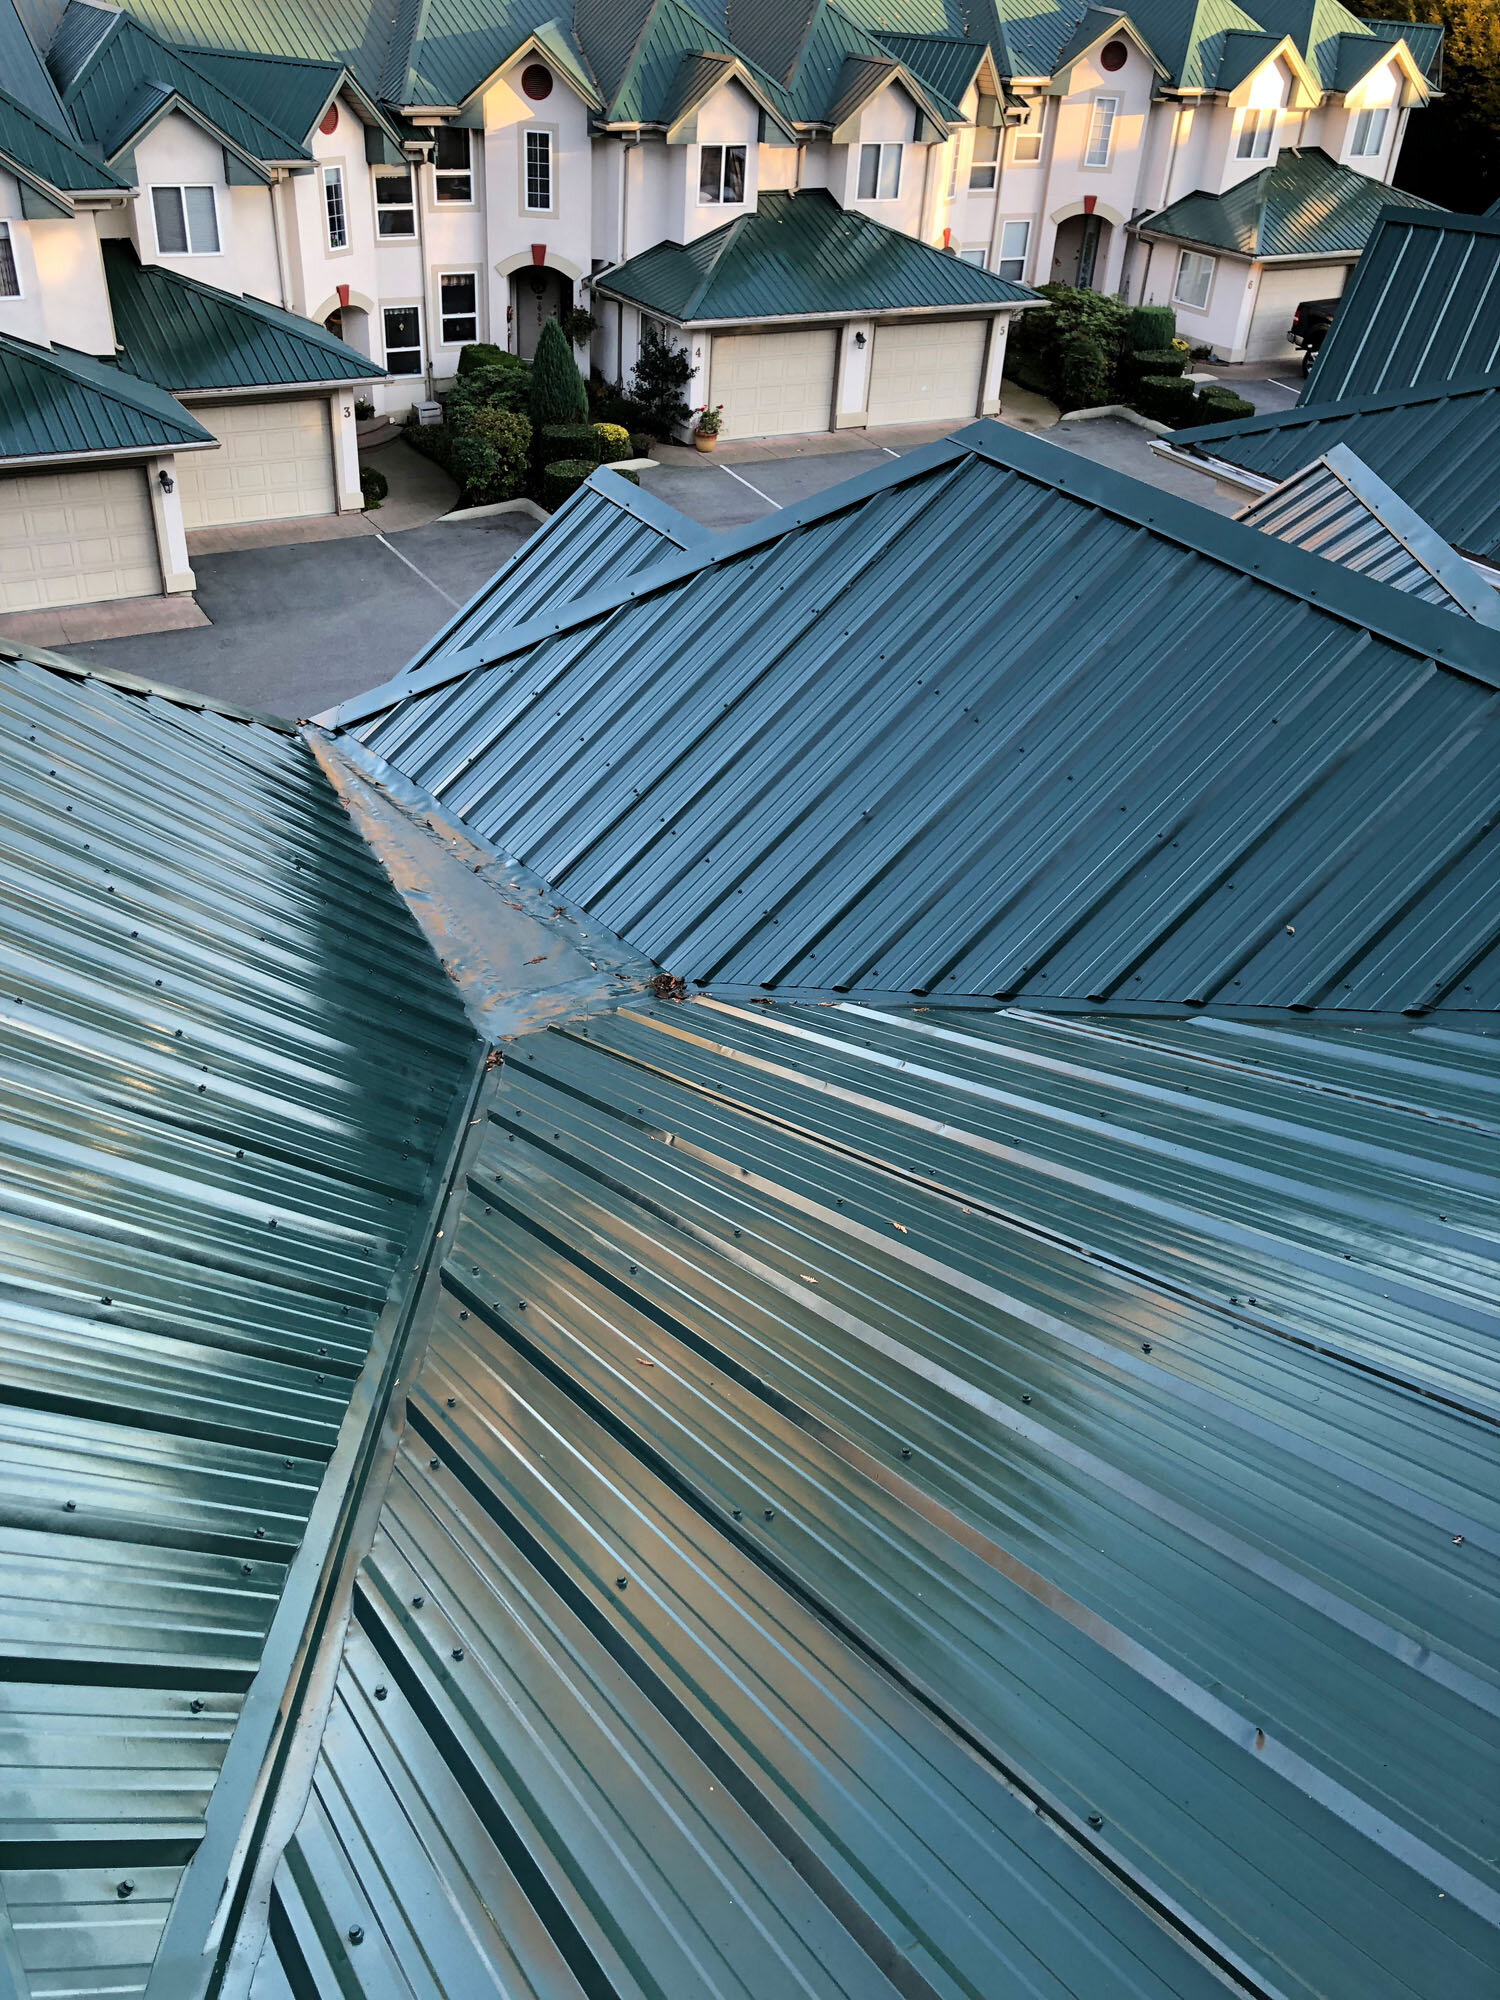 repainting-tin-roof-abbotsford22.jpg